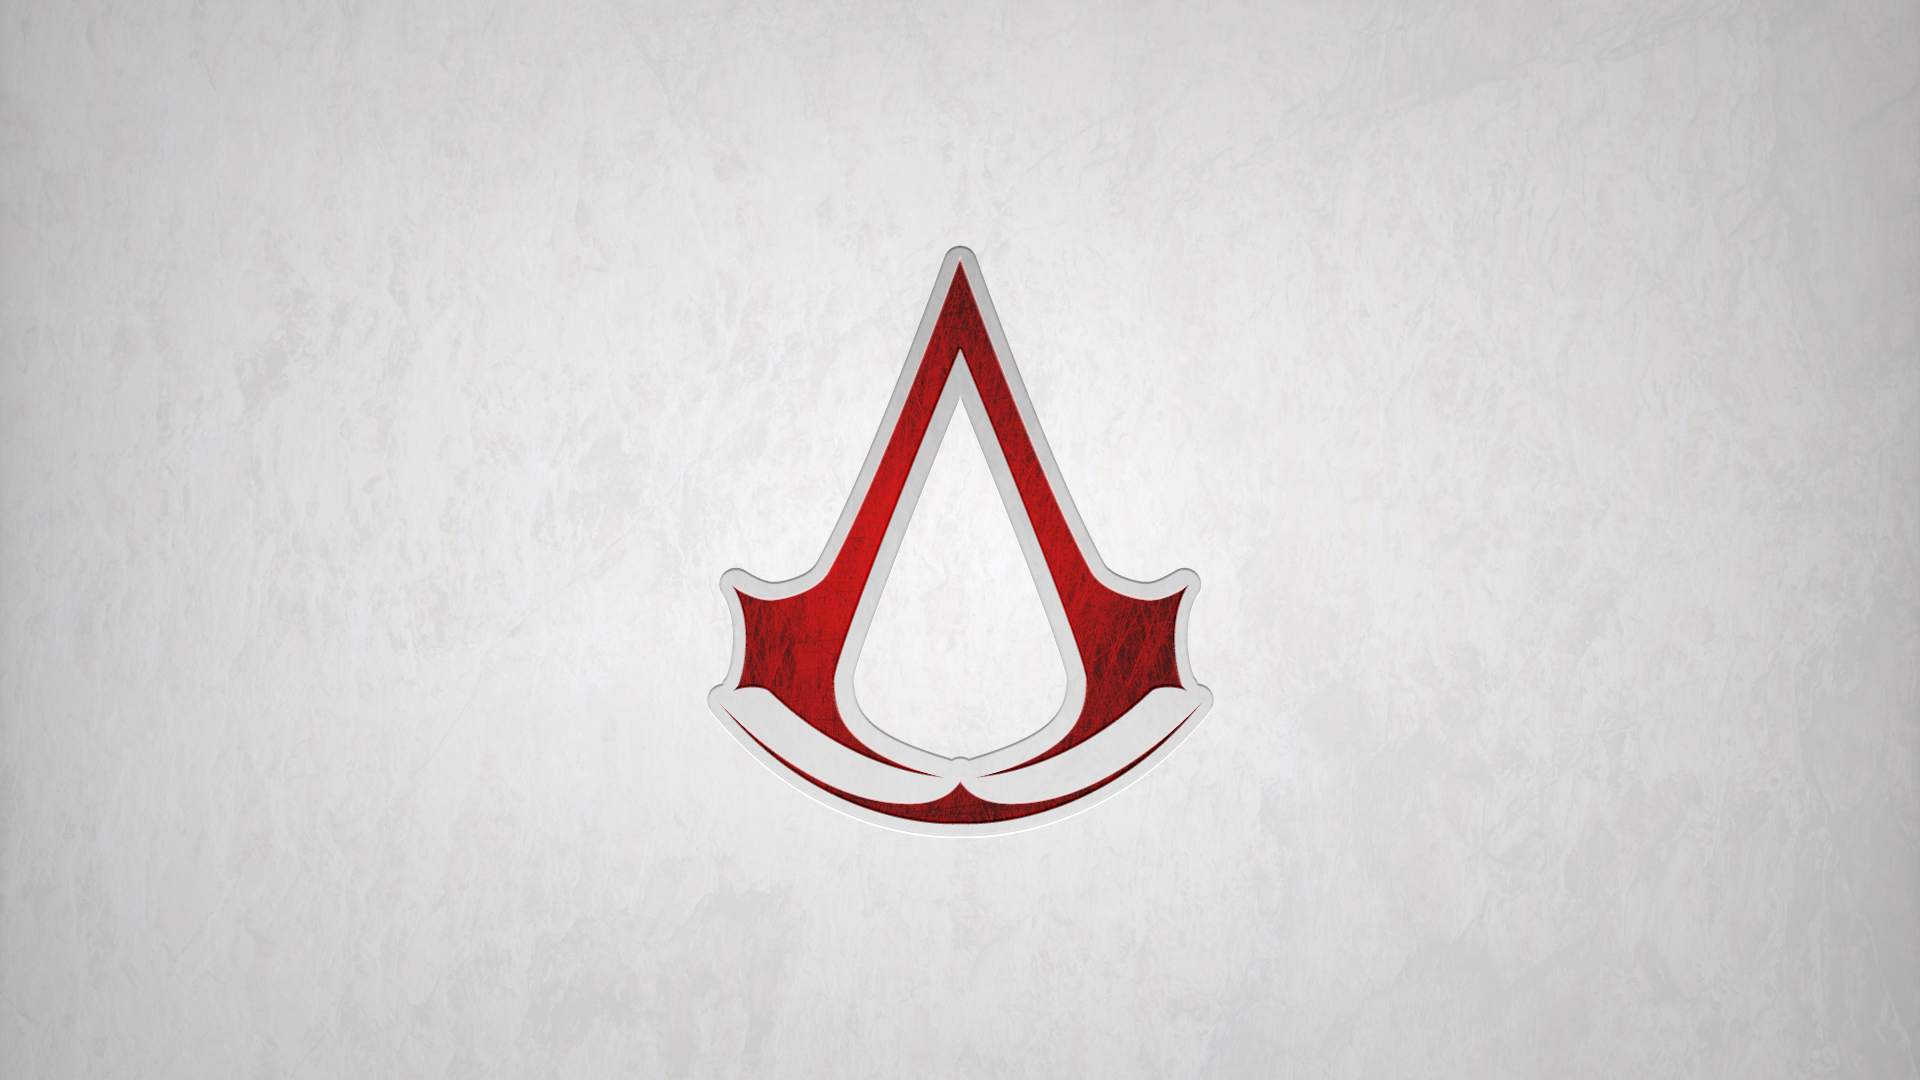 Assassins Creed Logo v1 by Erik Frick on Dribbble